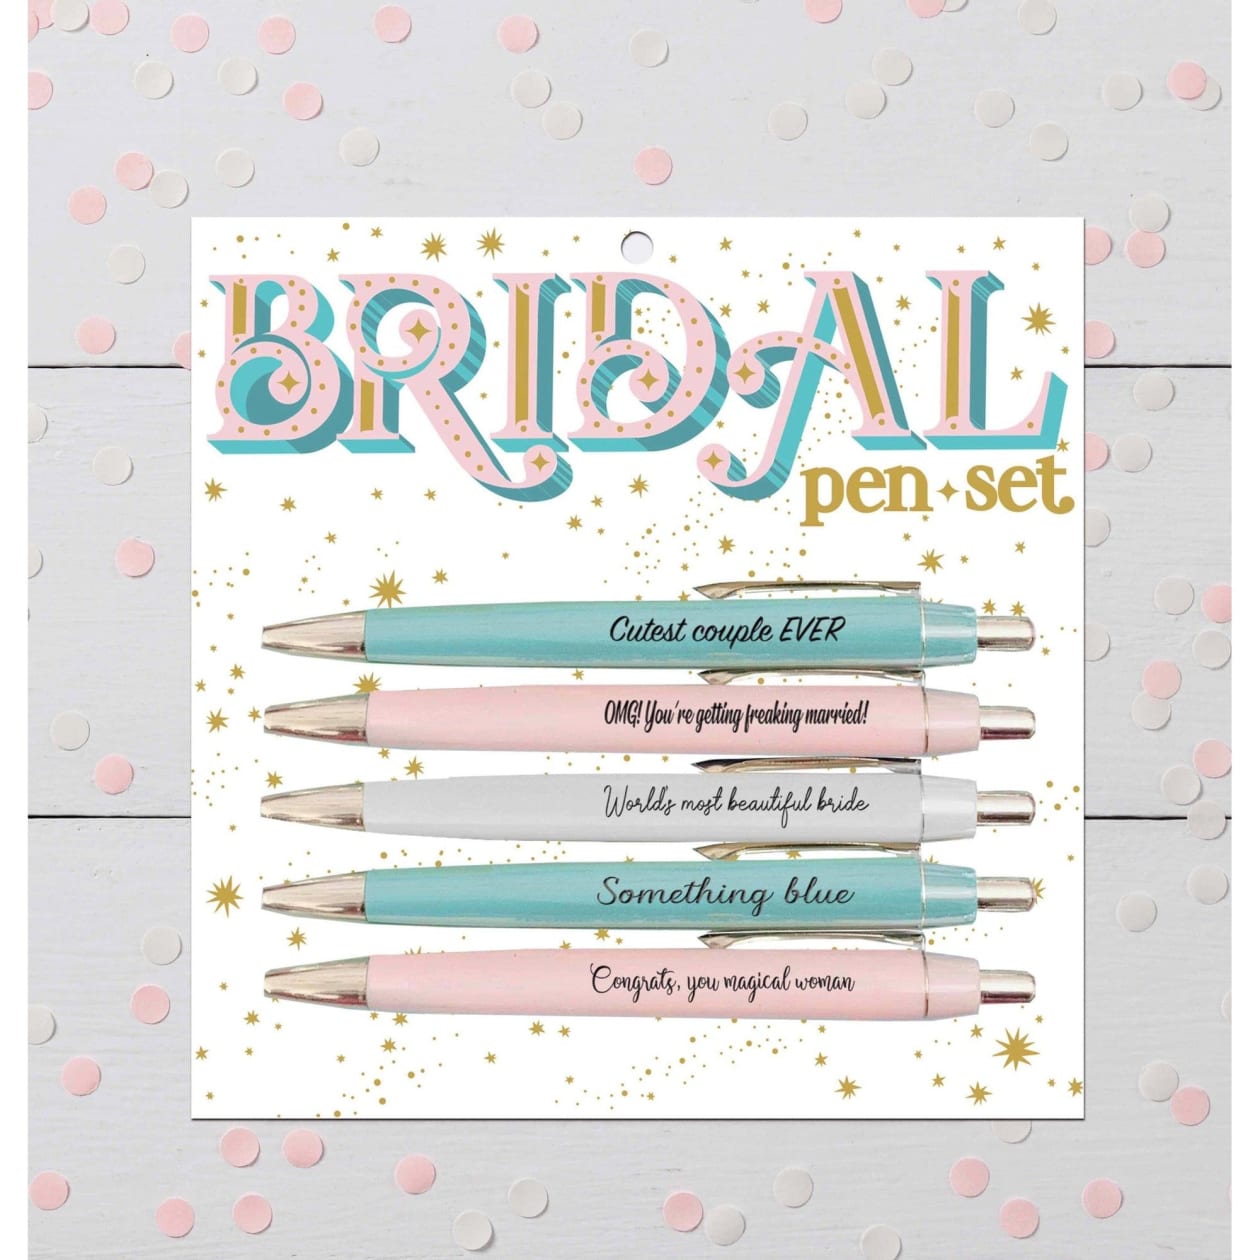 Fun Club Bridal Ballpoint Pen Set | et of 5 Gift Pens | World's Most Beautiful Bride, Something Blue, Etc.